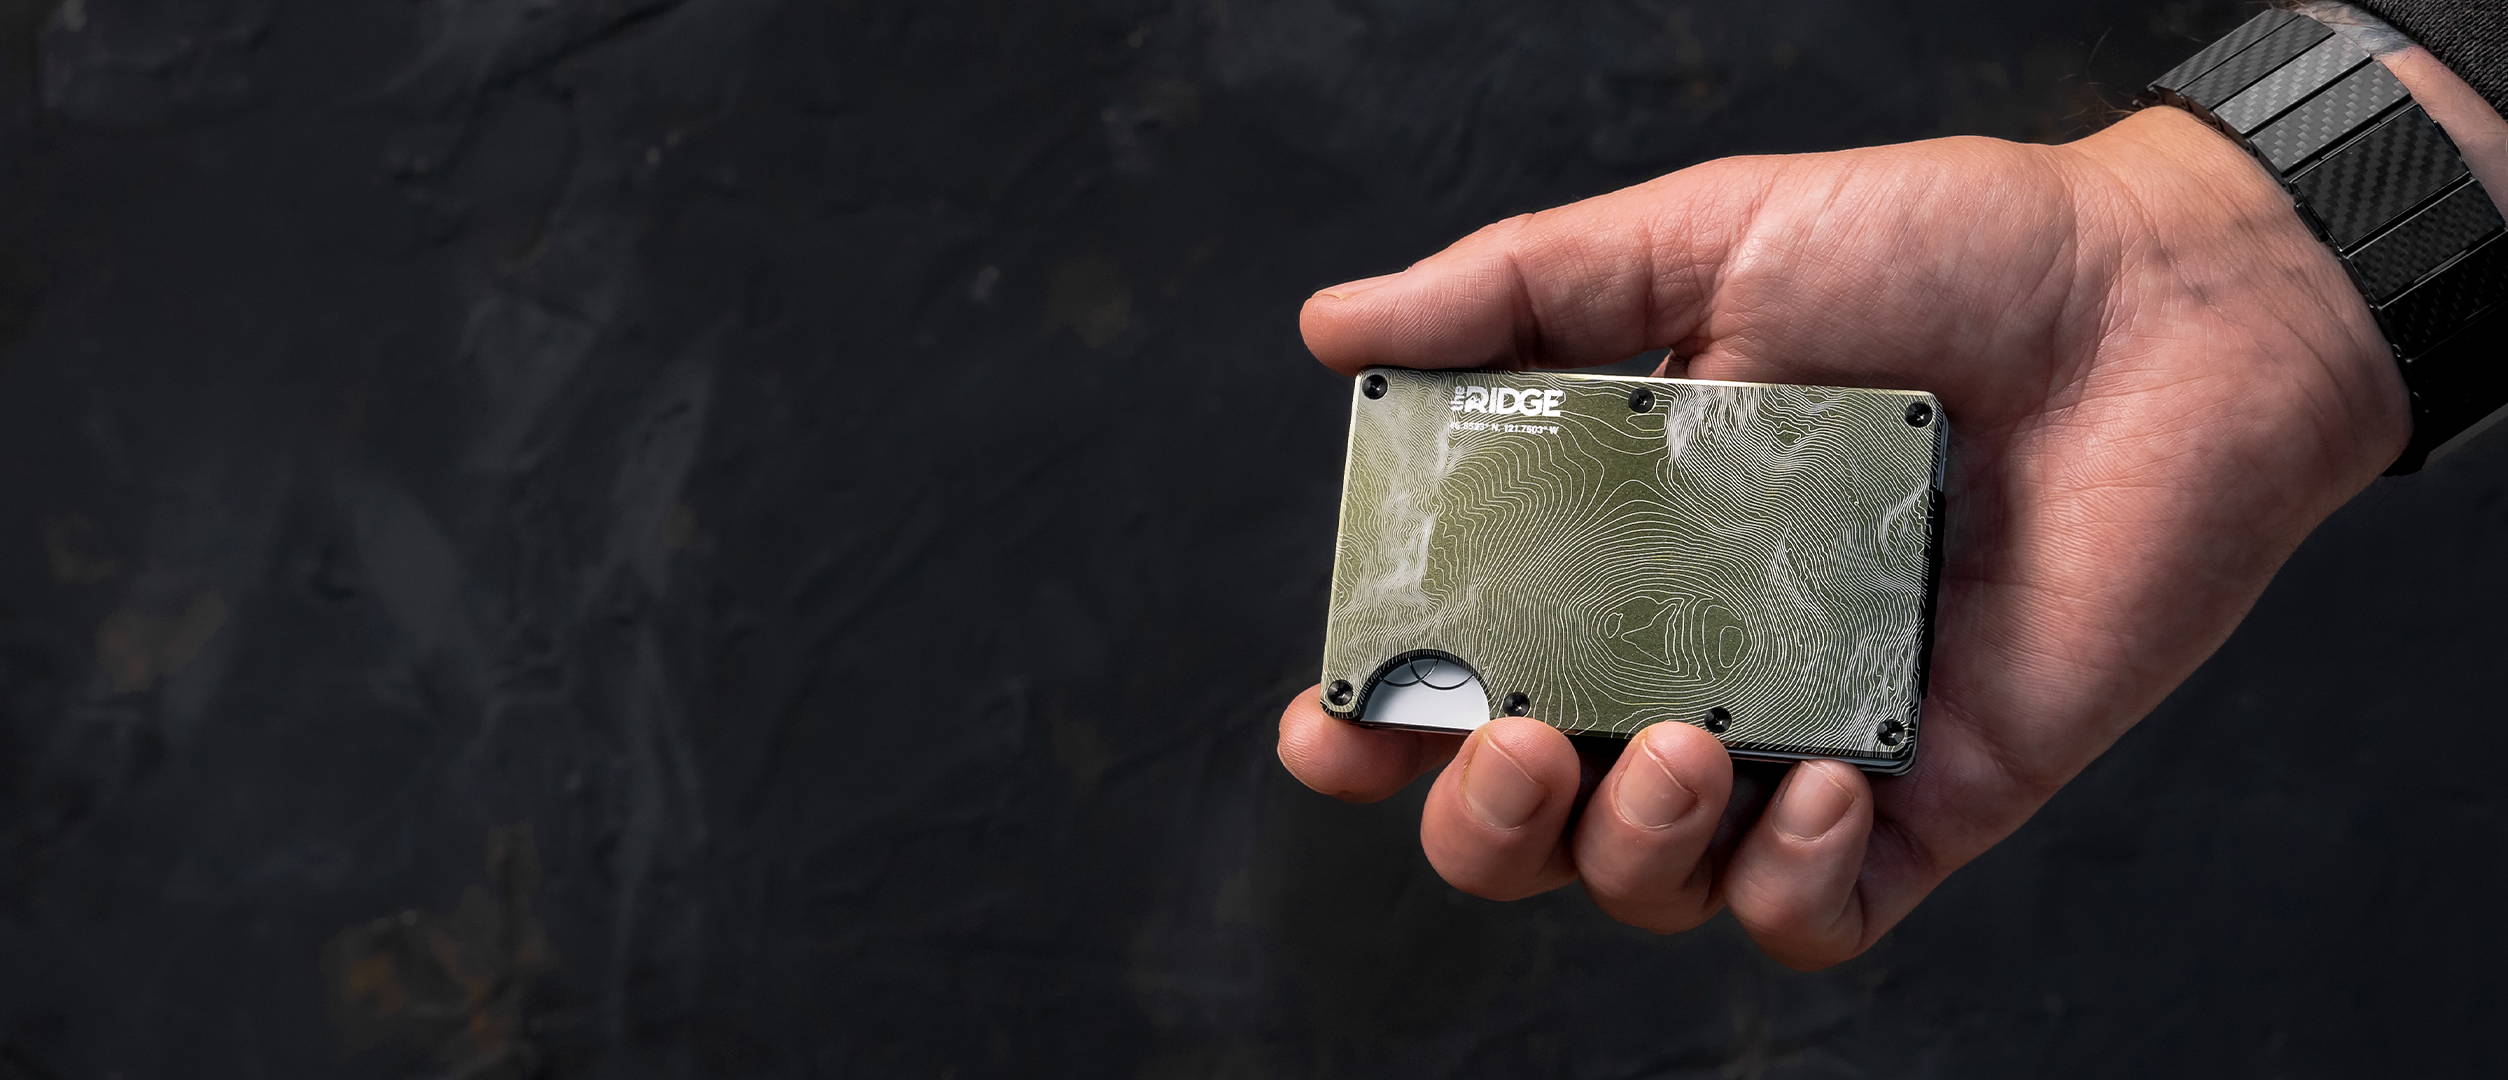 holding a Mount Rainier Ridge wallet